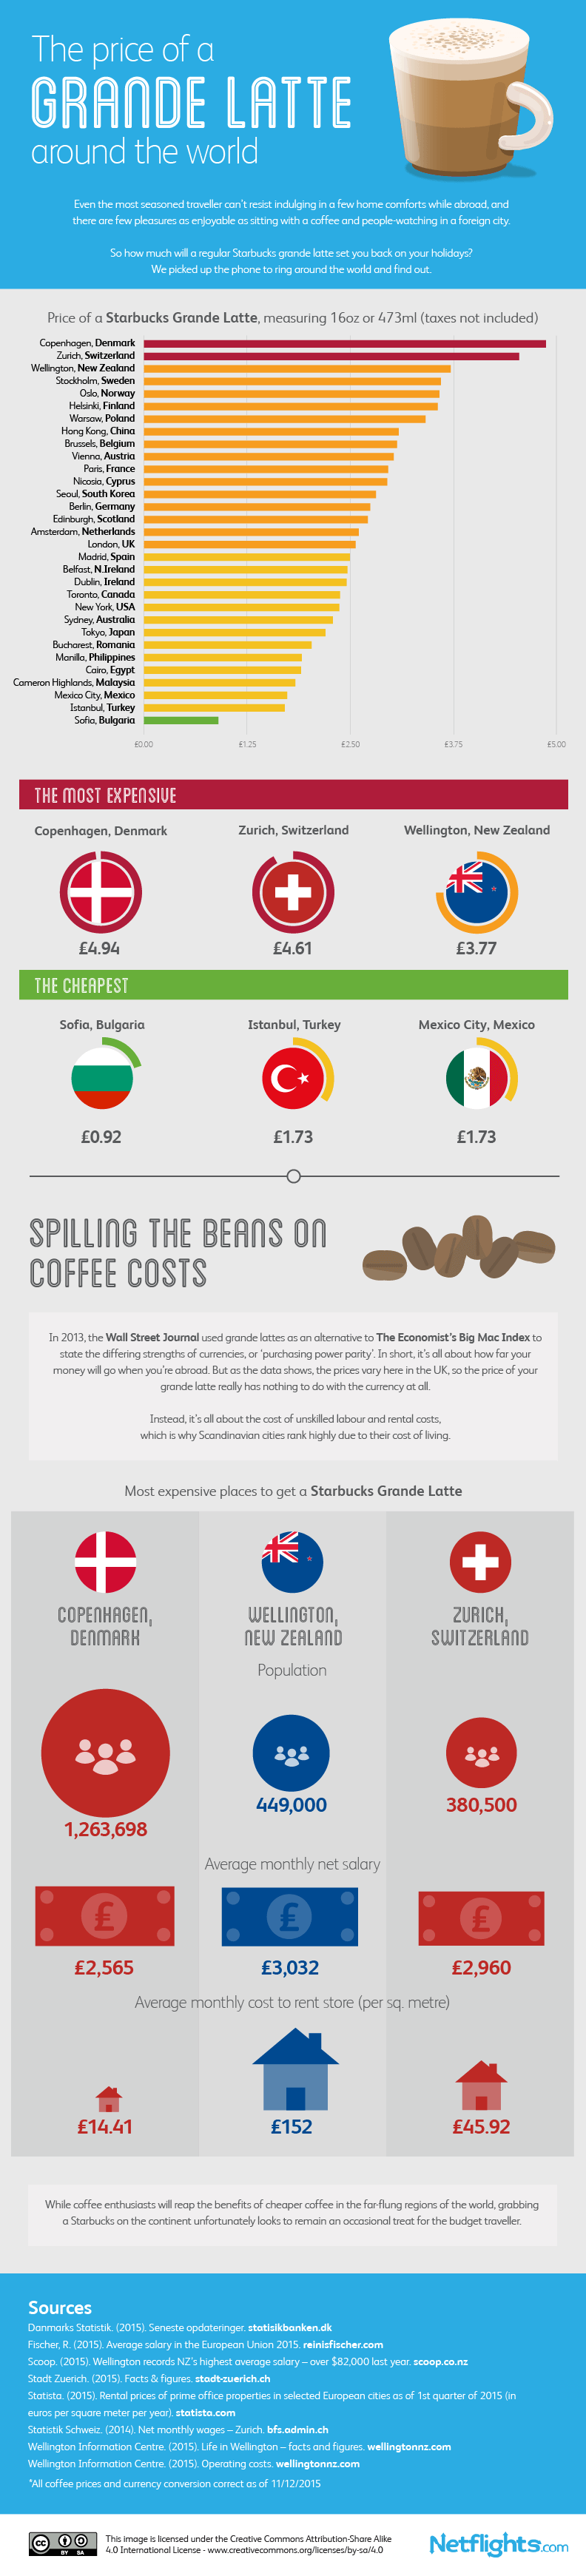 the-price-of-grande-latte-around-the-world